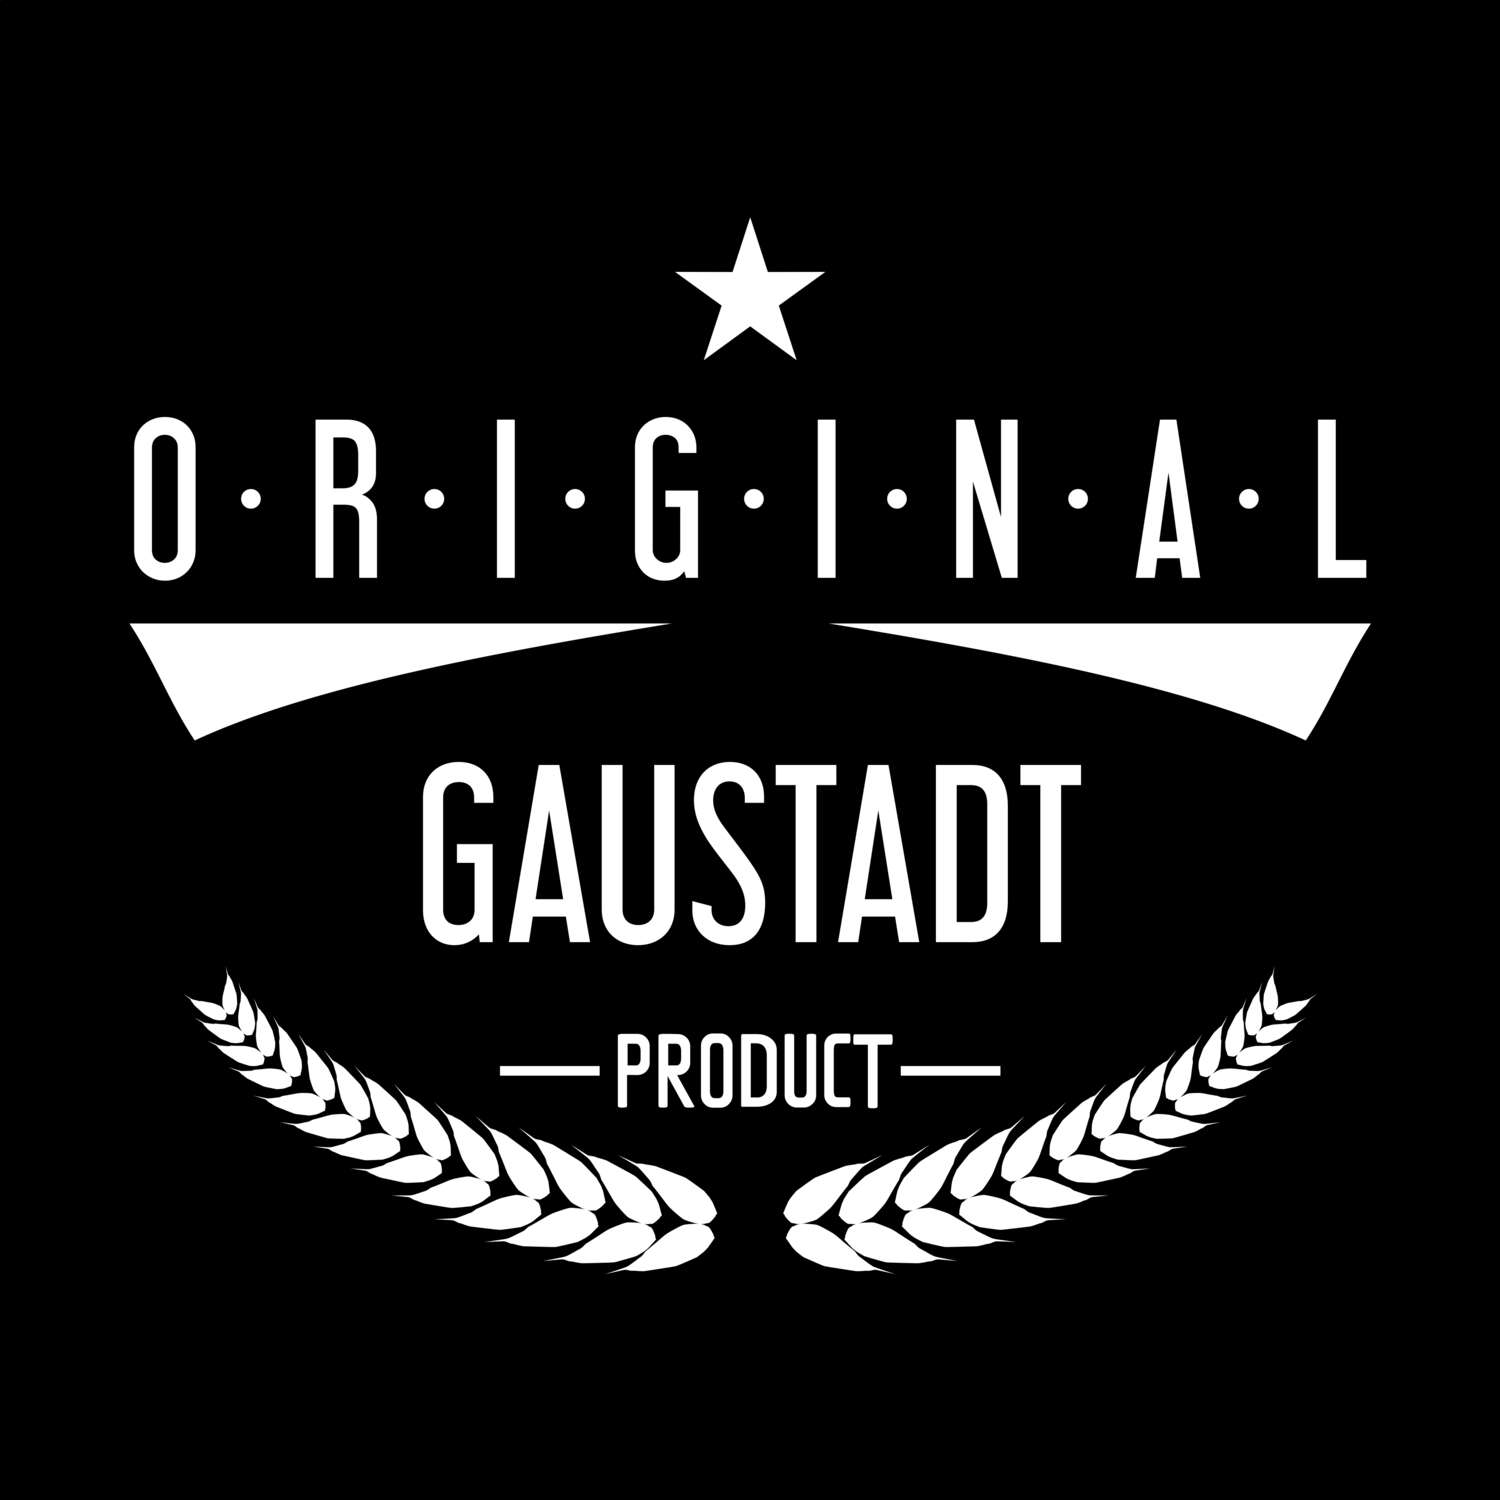 Gaustadt T-Shirt »Original Product«